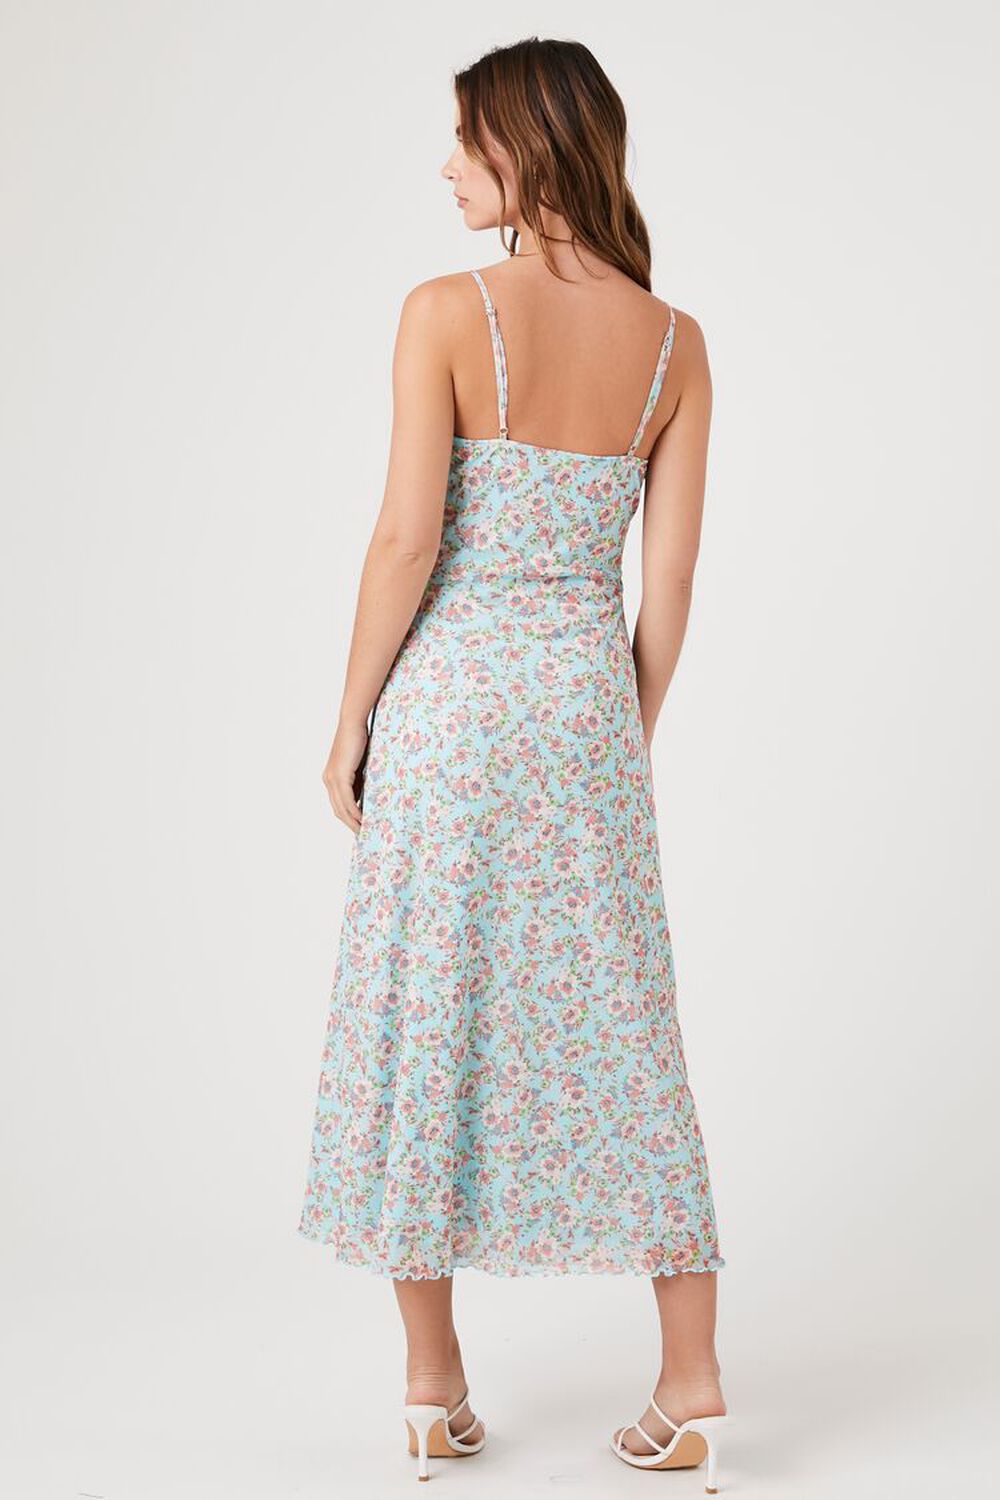 BLUE/MULTI Floral Print Cami Midi Dress, image 3